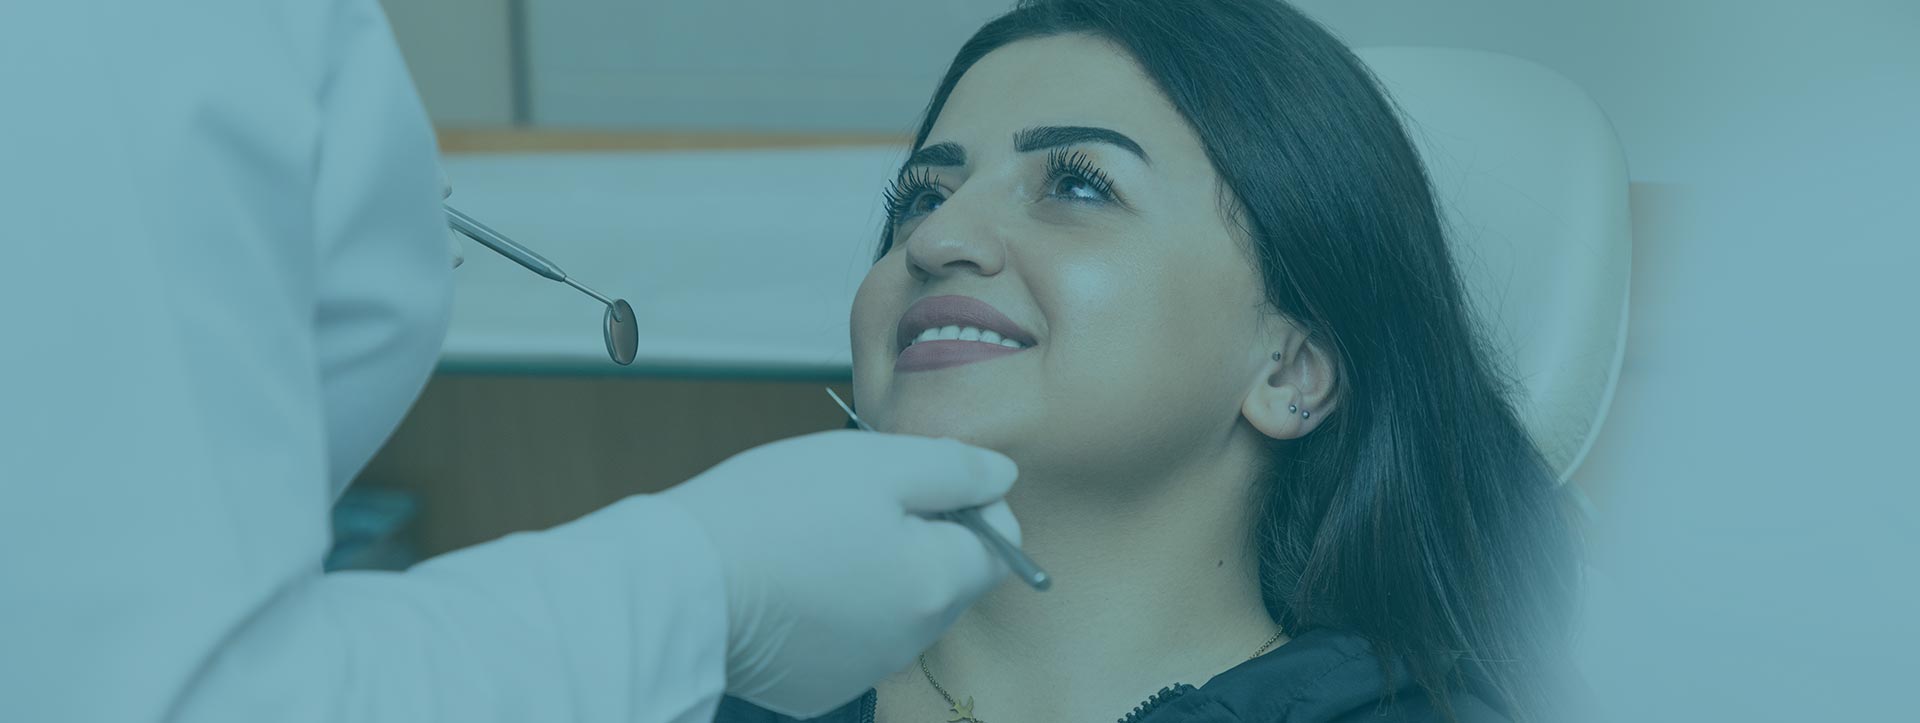 Woman having cosmetic dentistry at the dental